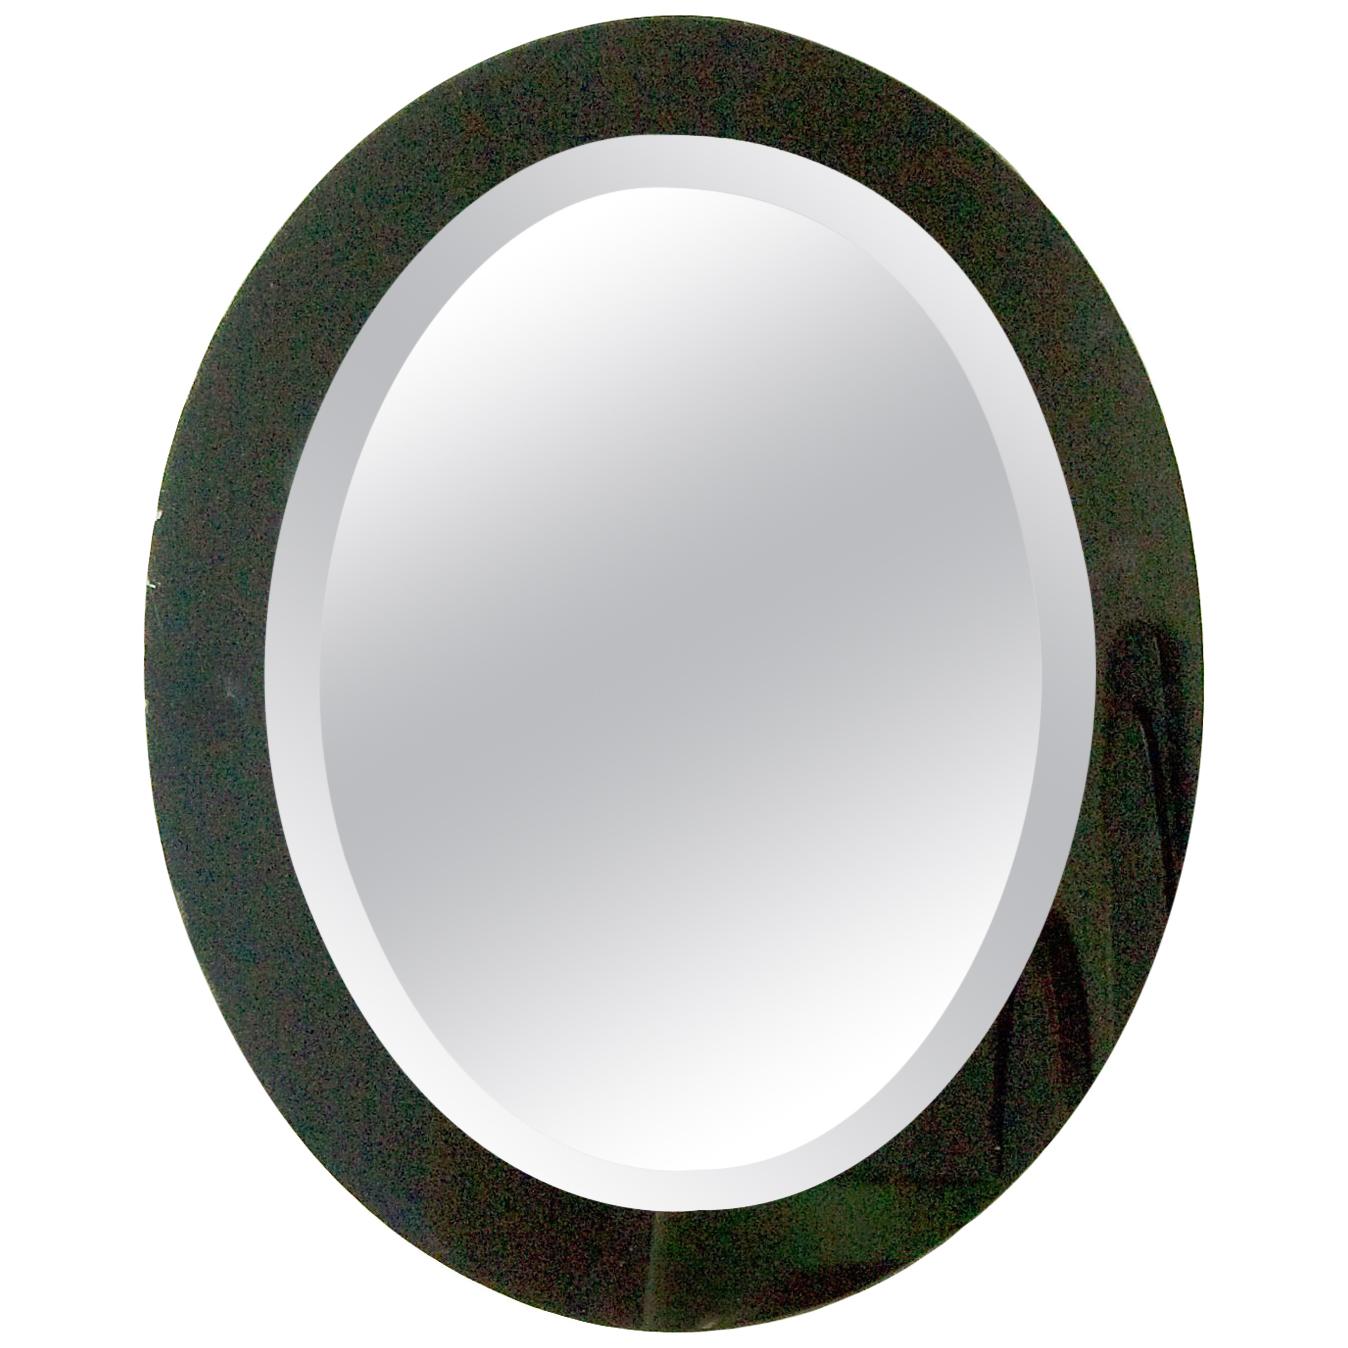 1960s Oval Beveled Mirror, Smoked Green Mirror Frame, Italy